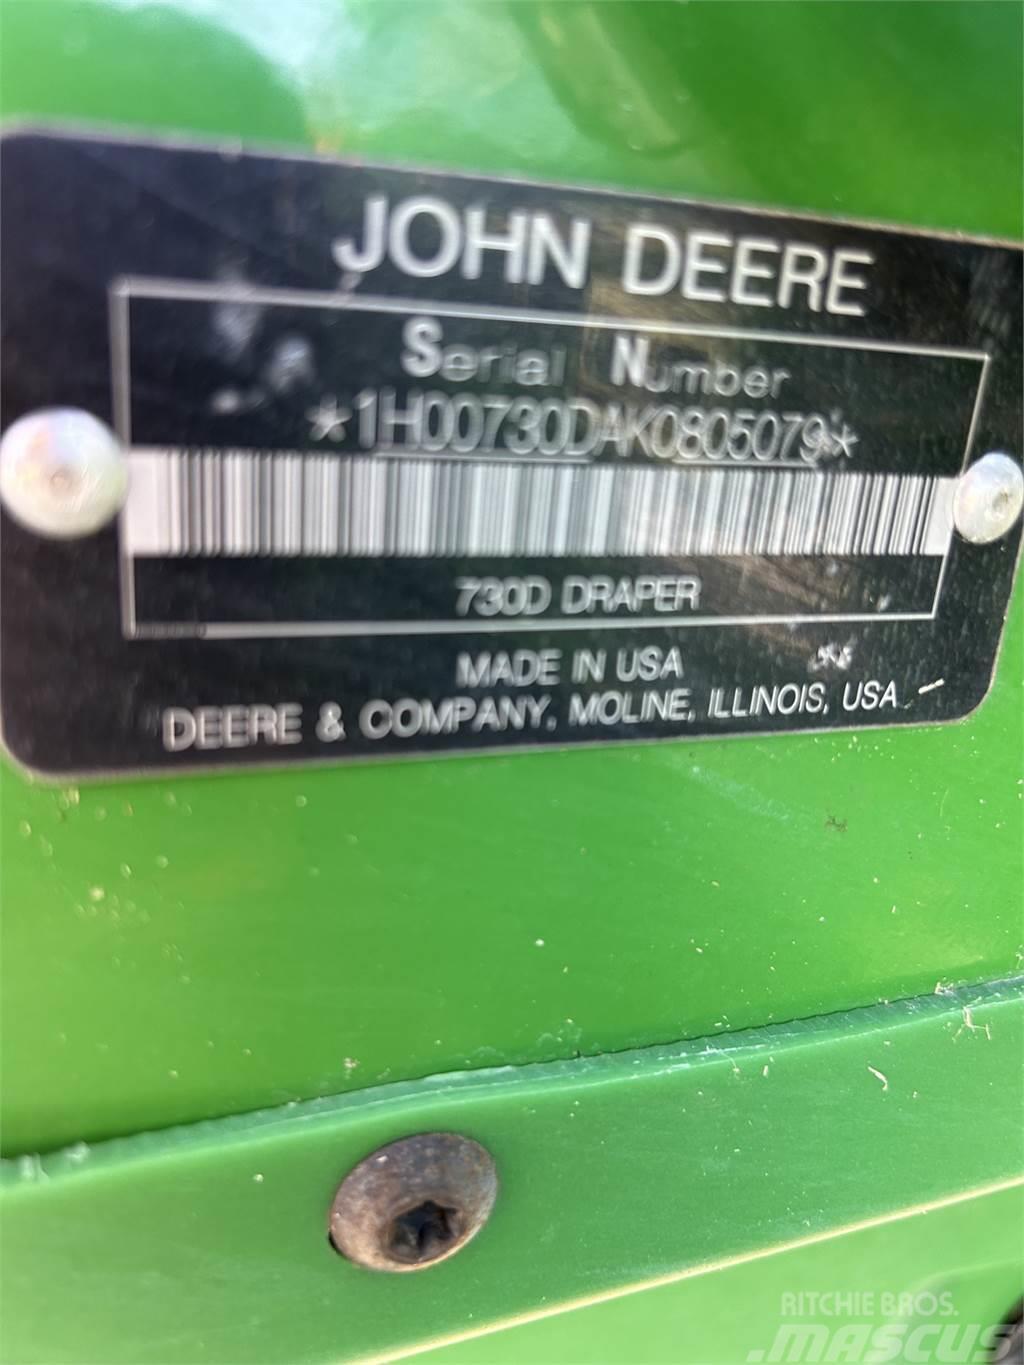 John Deere 730D Skurtresker tilbehør